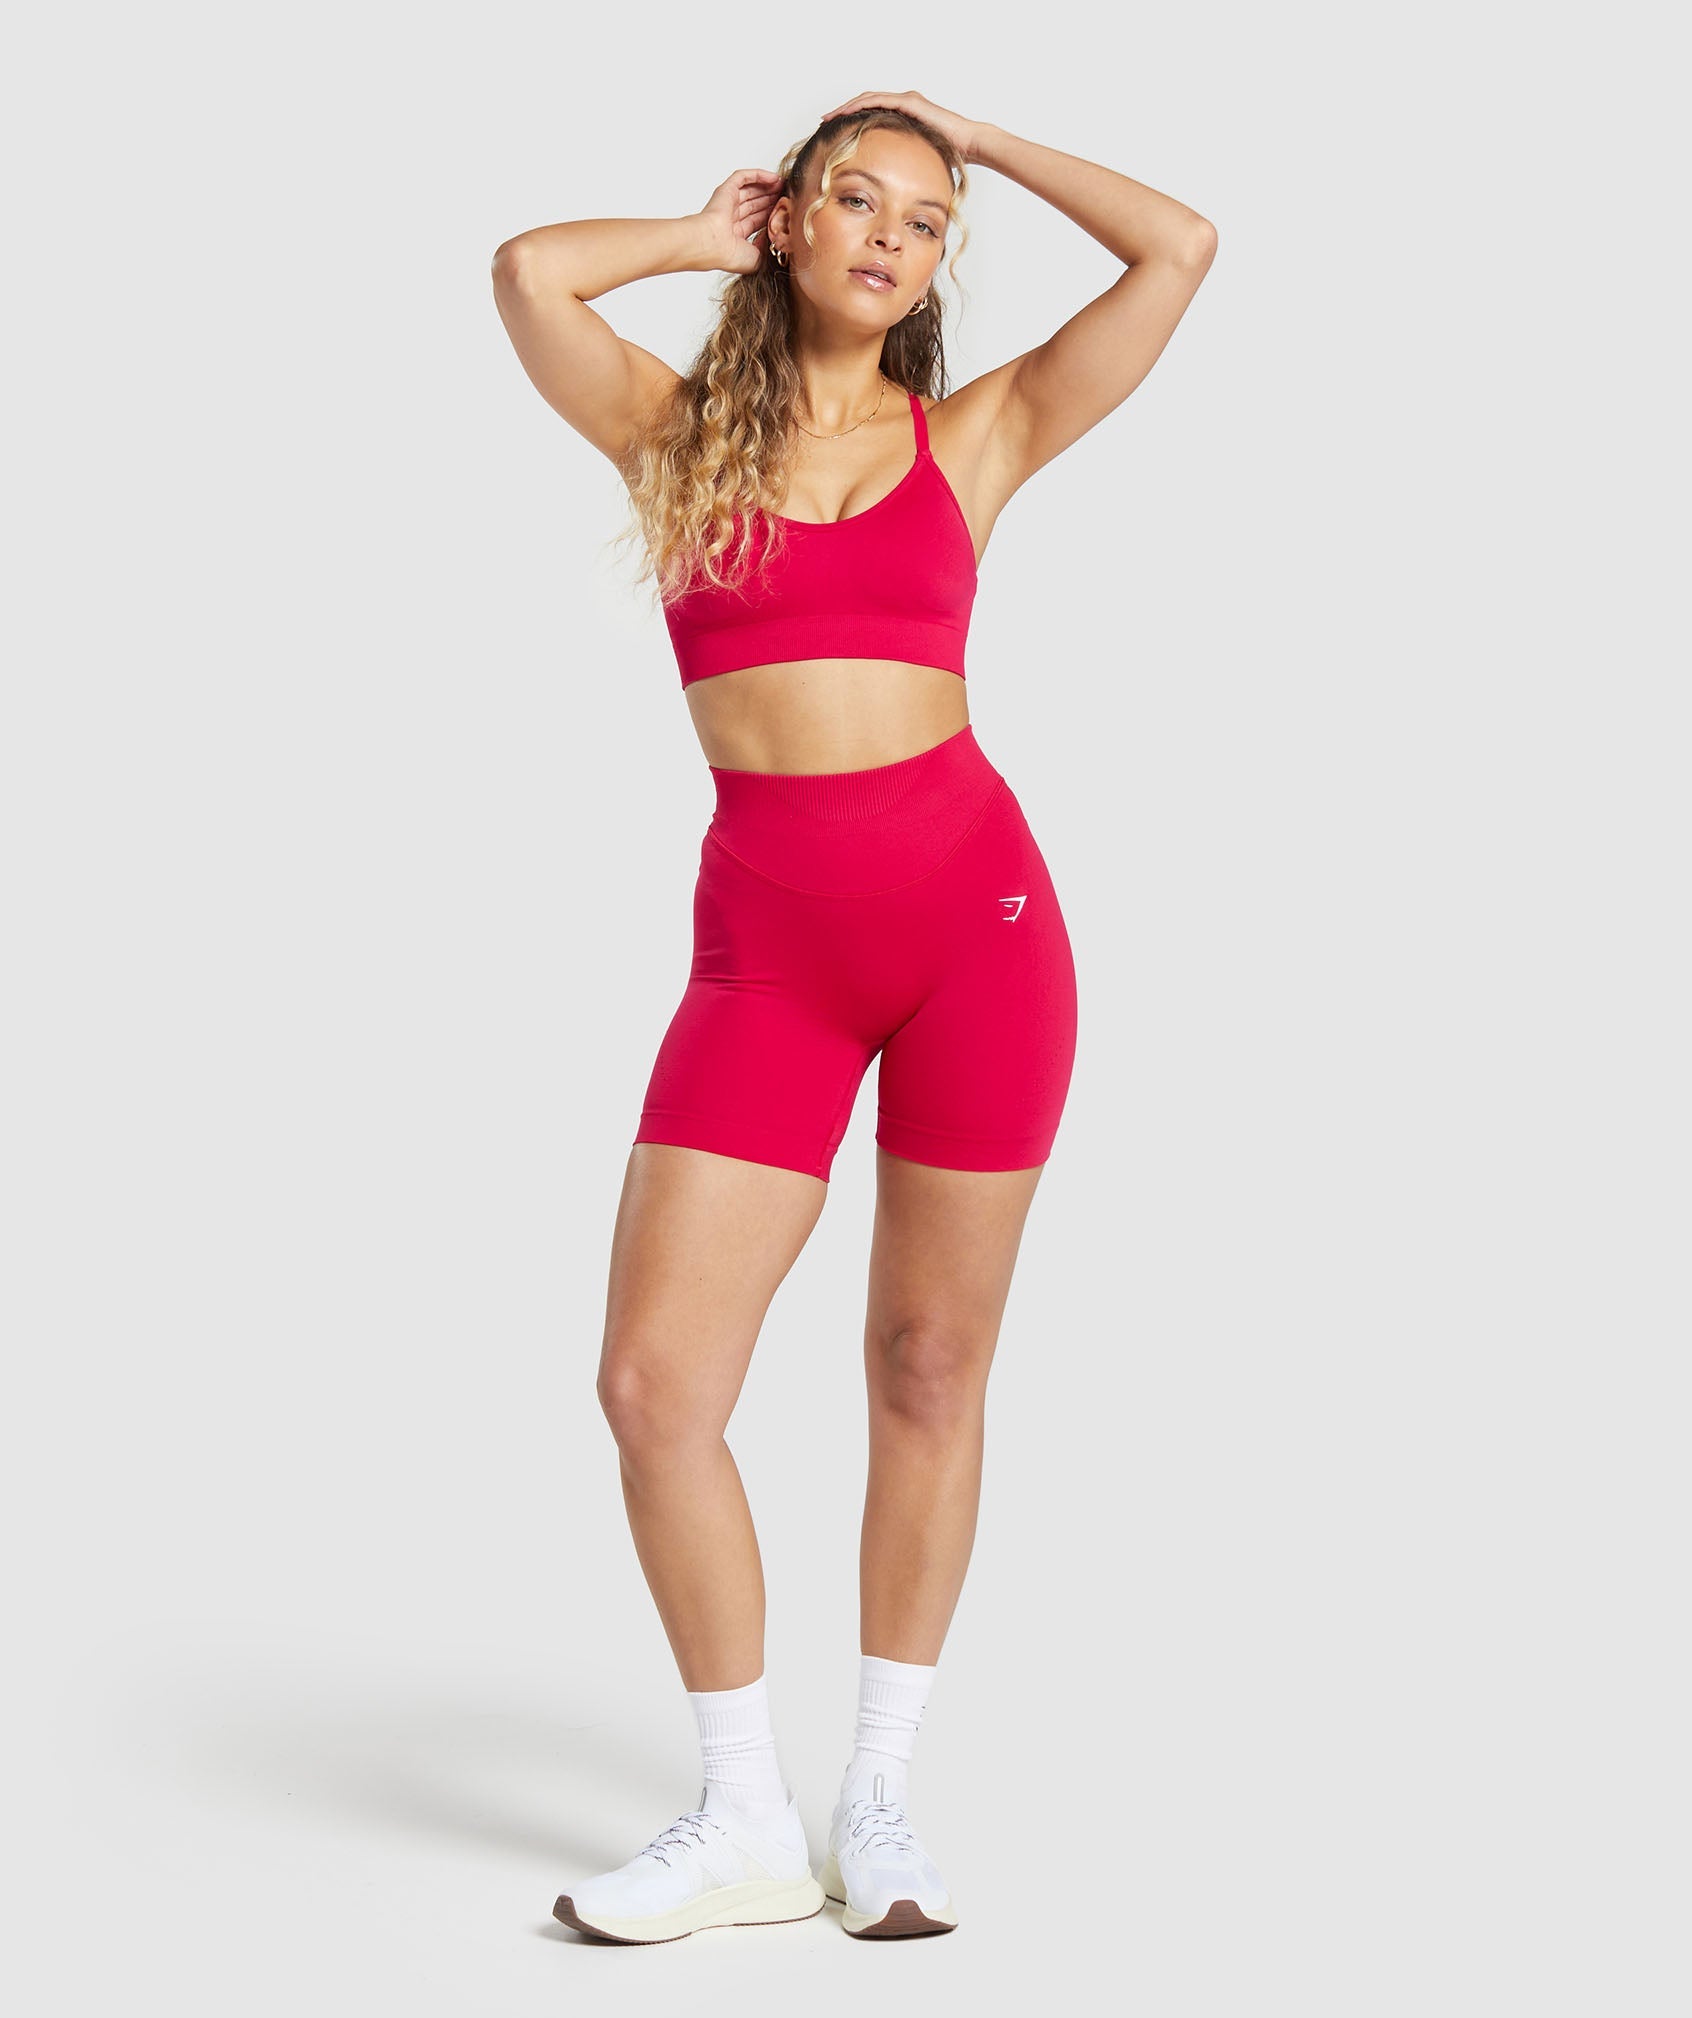 Gymshark Sport Bra Pink Size XS - $30 - From Janelle